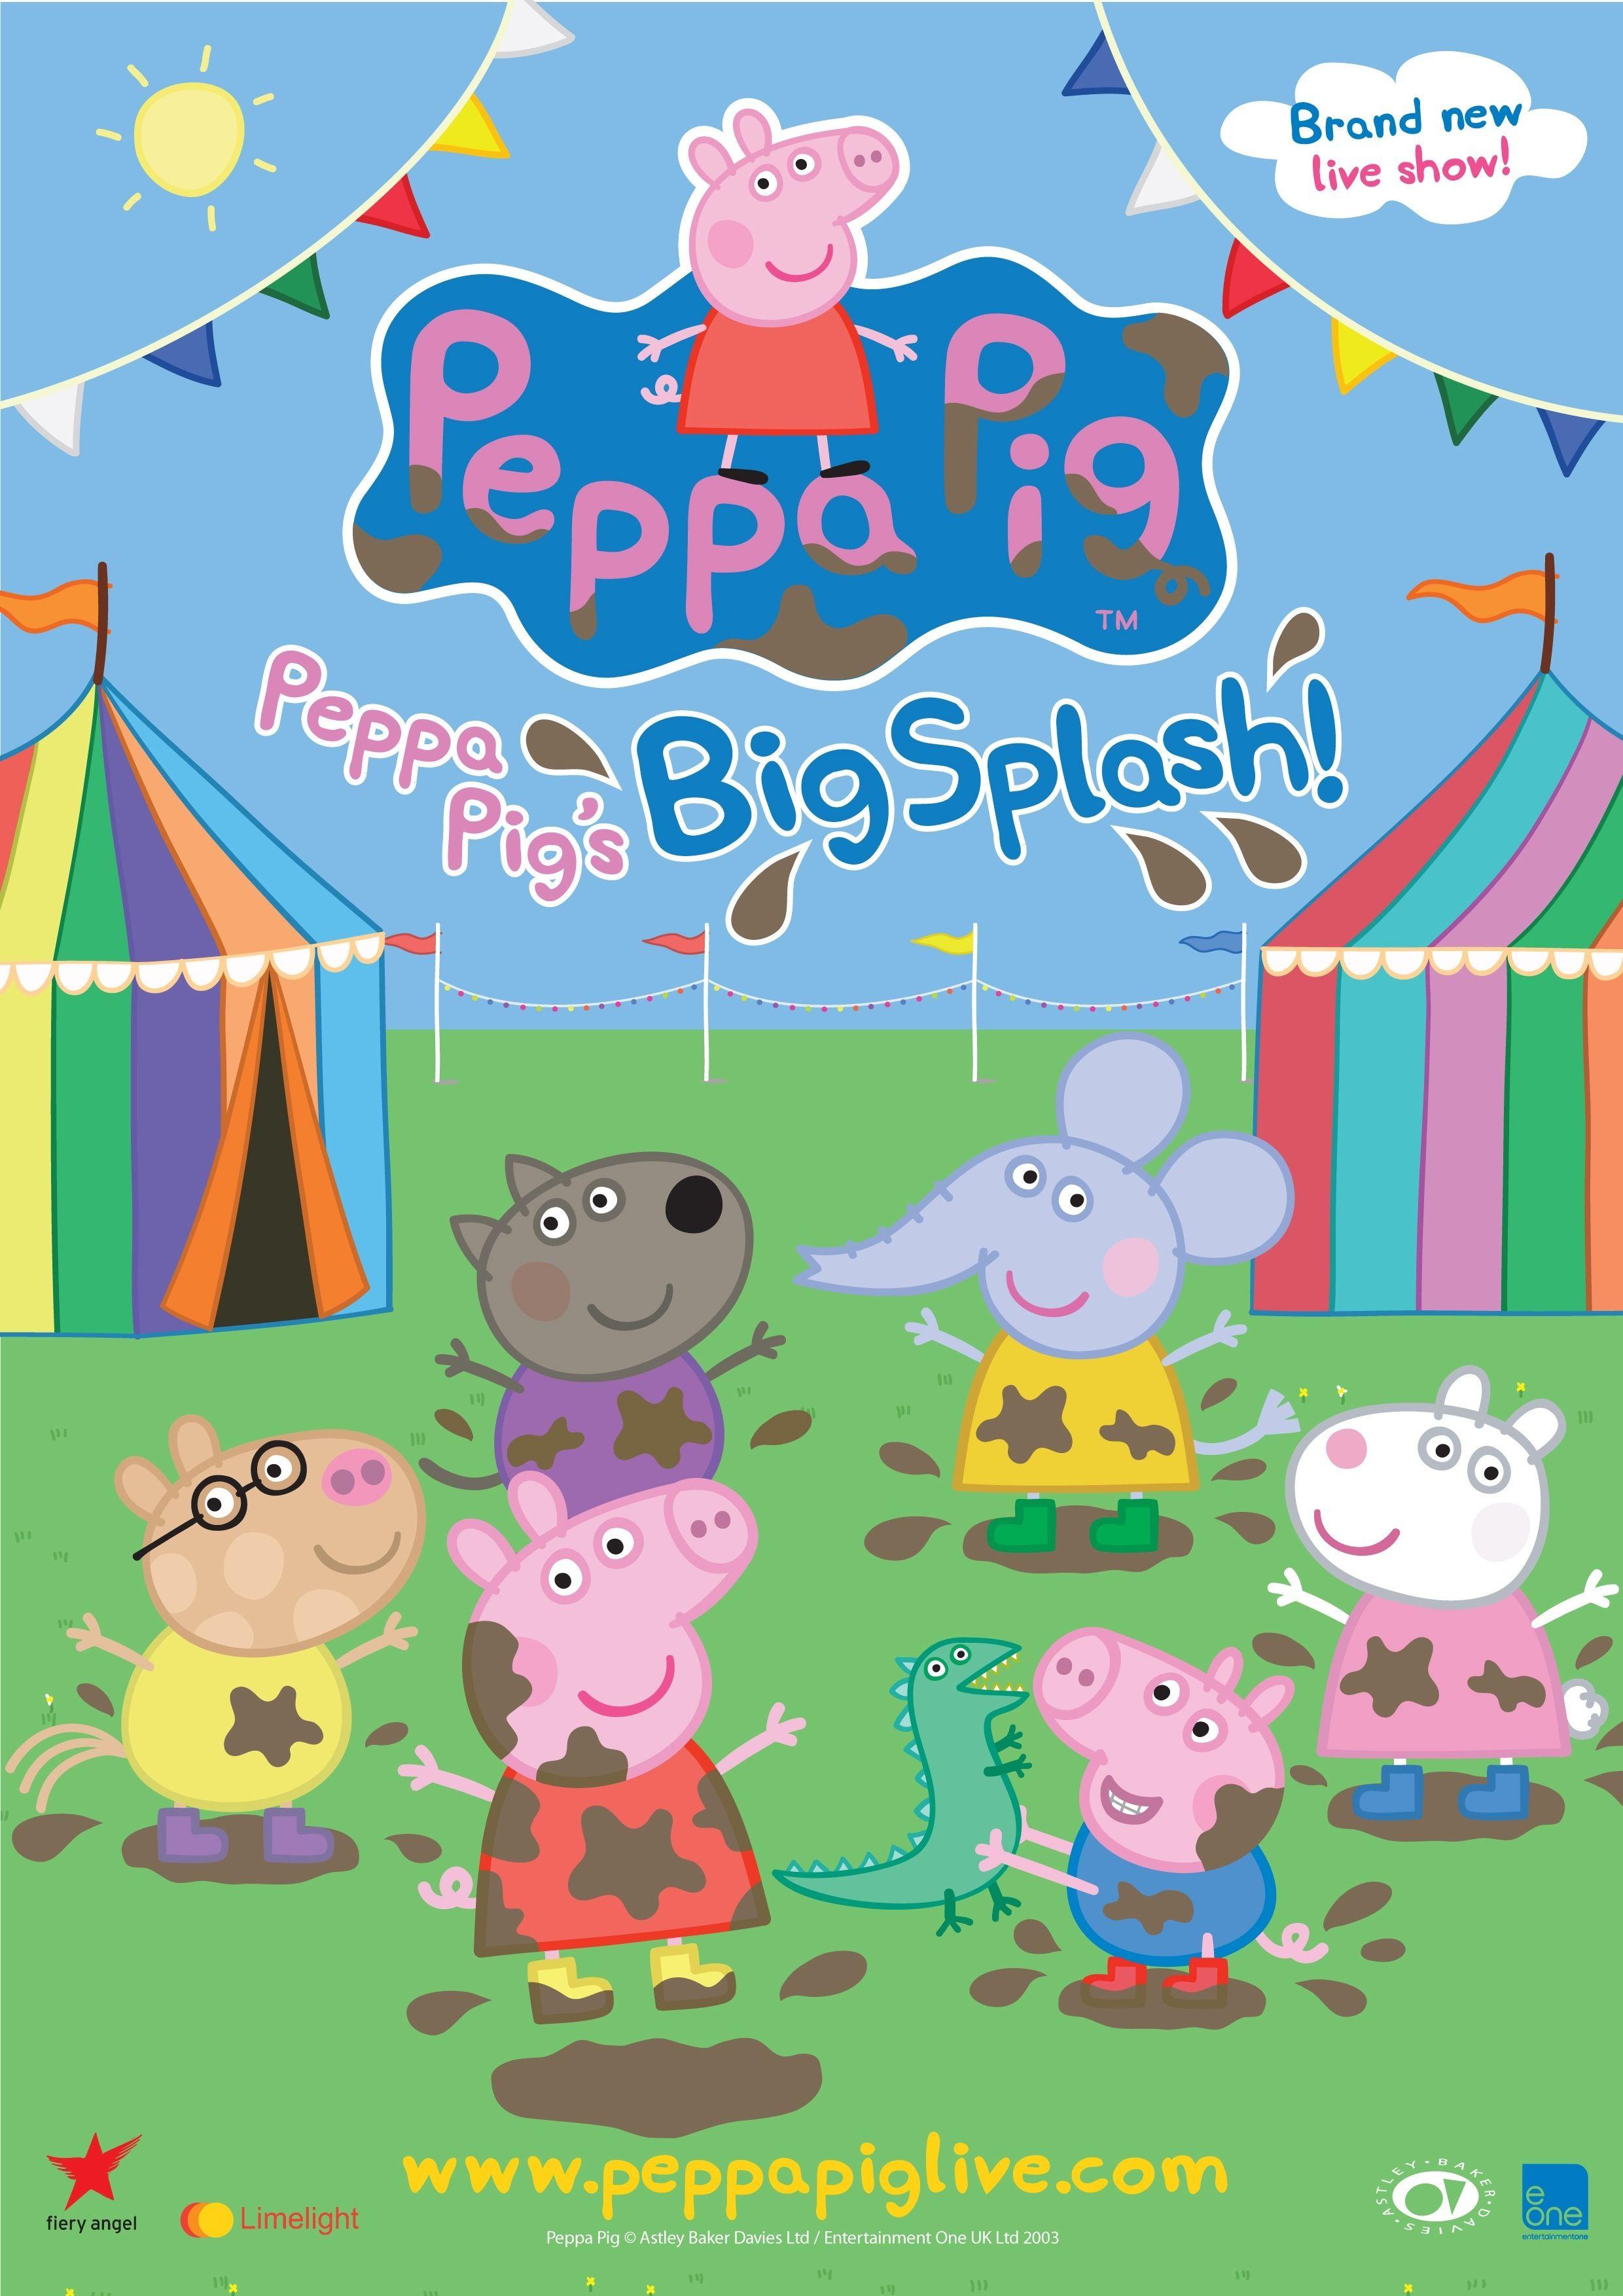 Peppa Pig Wallpapers - Wallpaper Cave